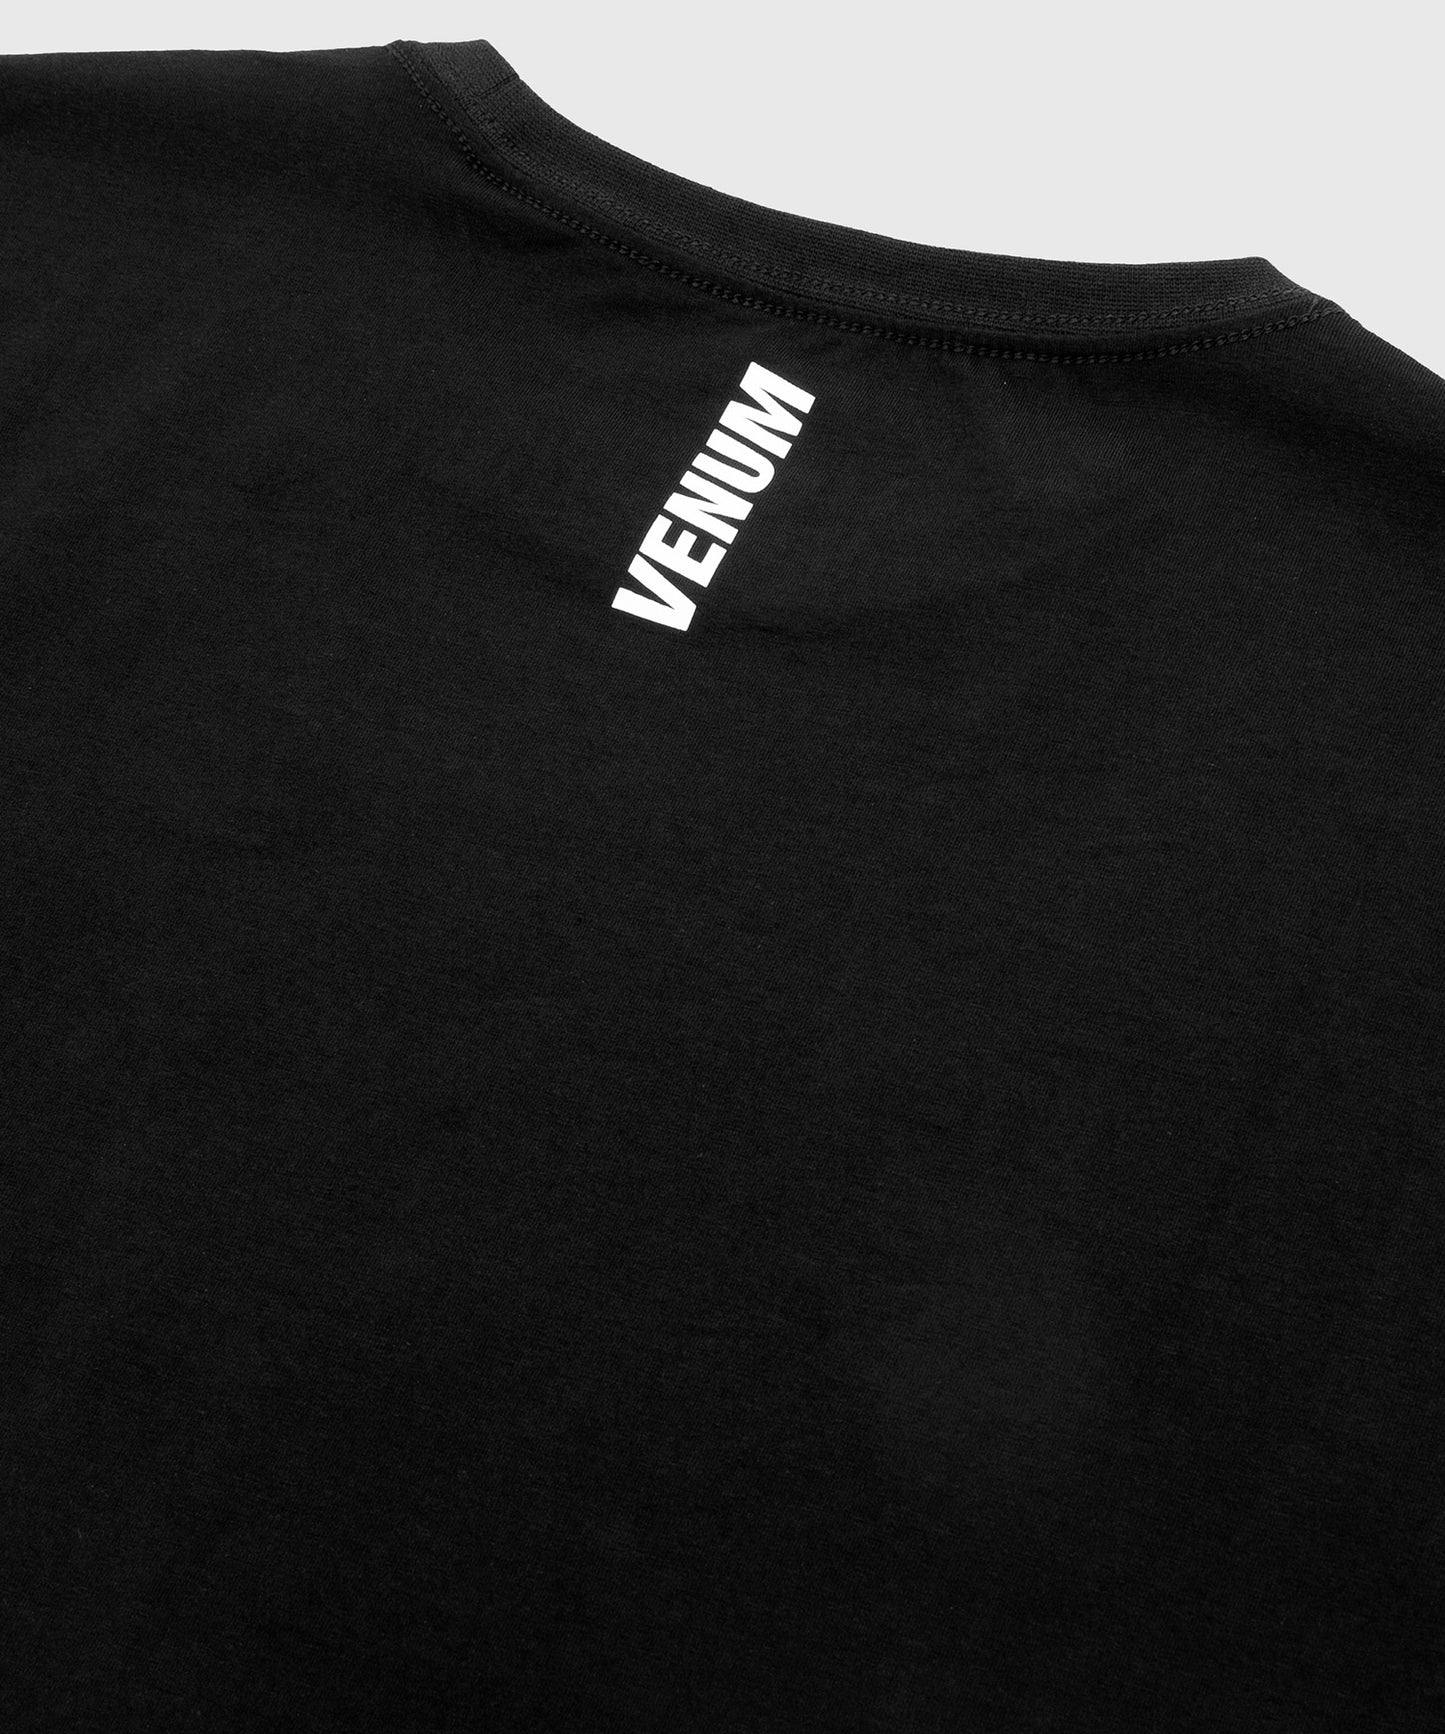 T-shirt Jiu Jitstu VT Venum - Nero/Bianco